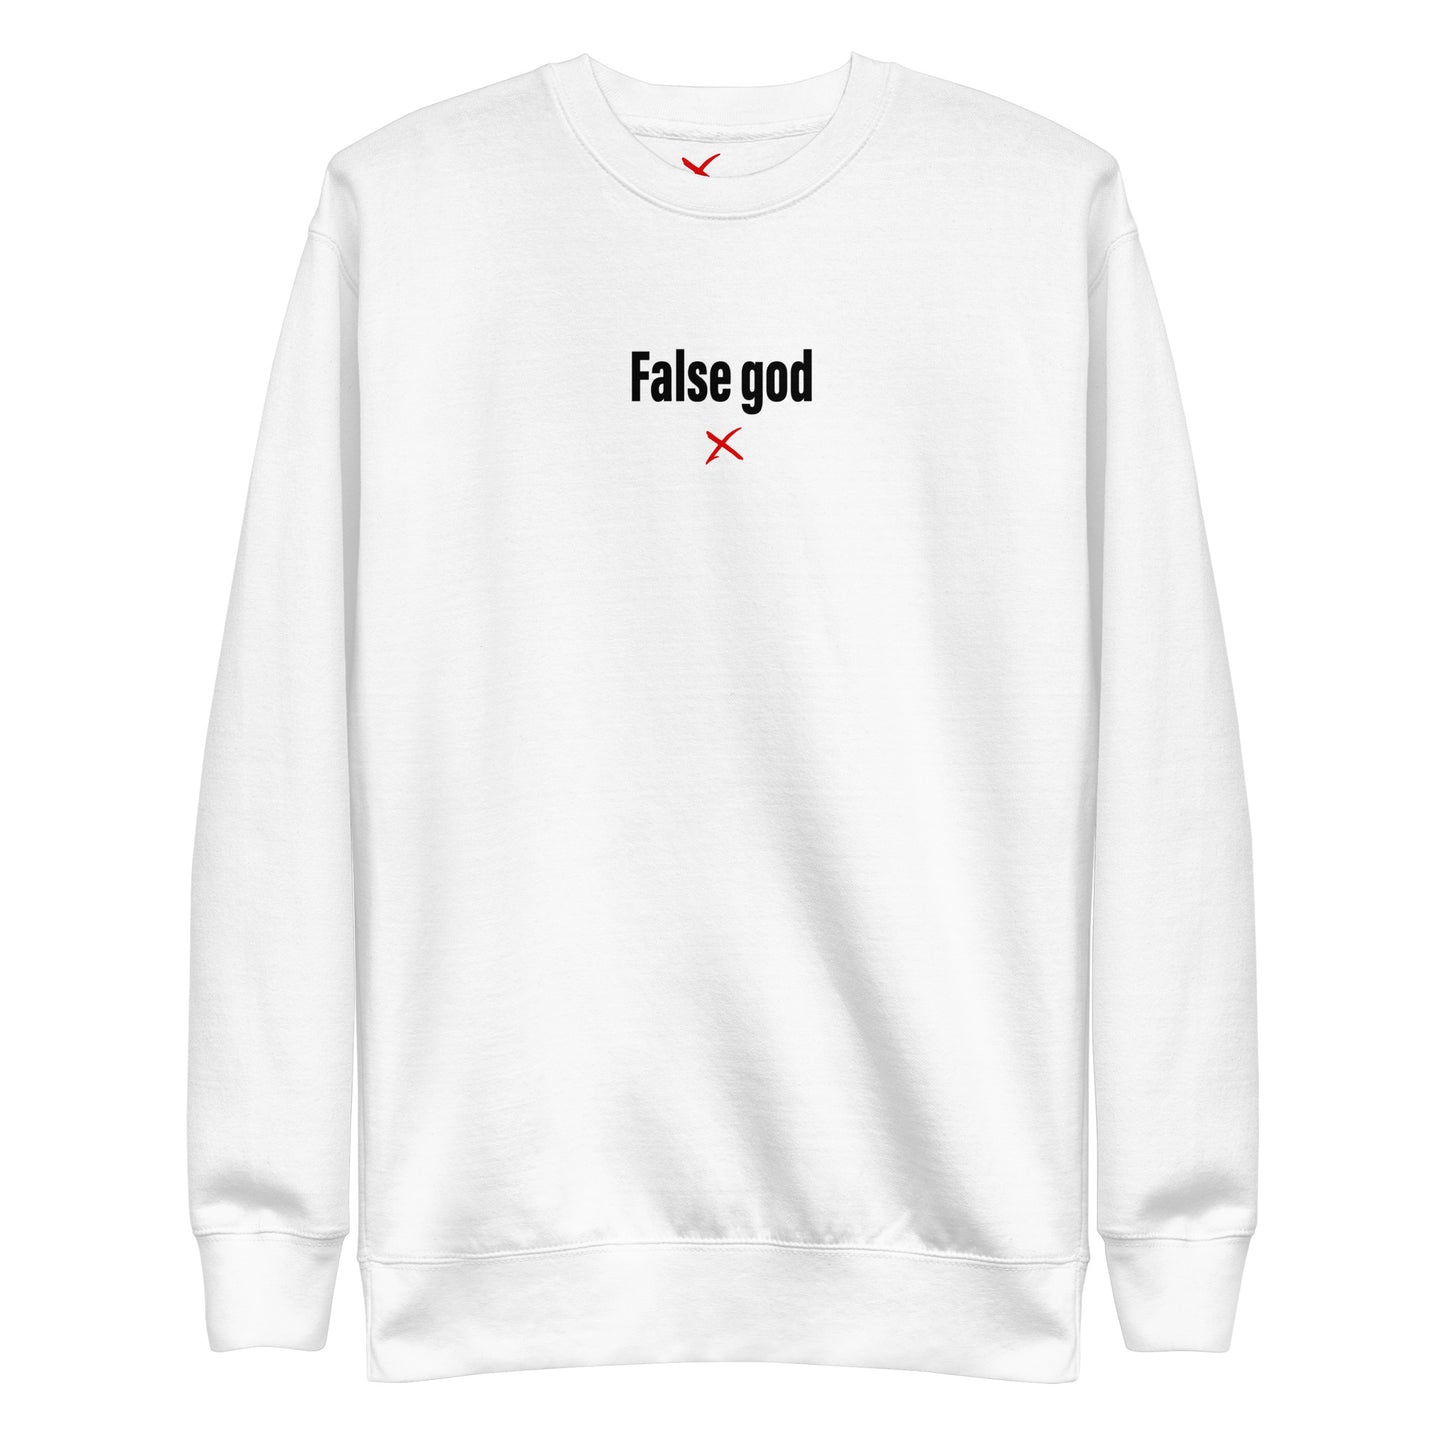 False god - Sweatshirt